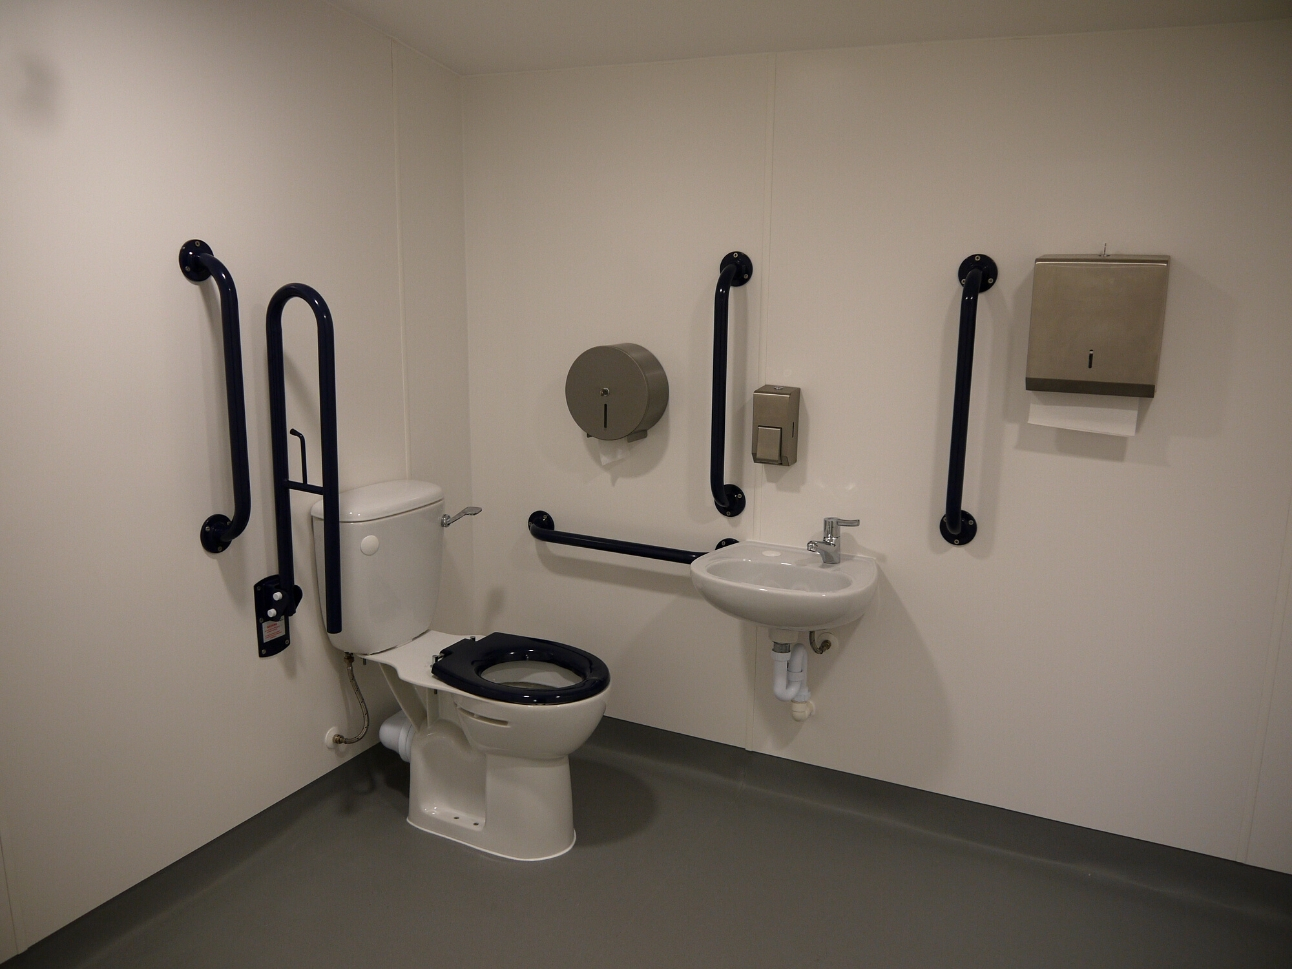 Matravers School Toilet Refurbishment | Case Study | Commercial Washrooms